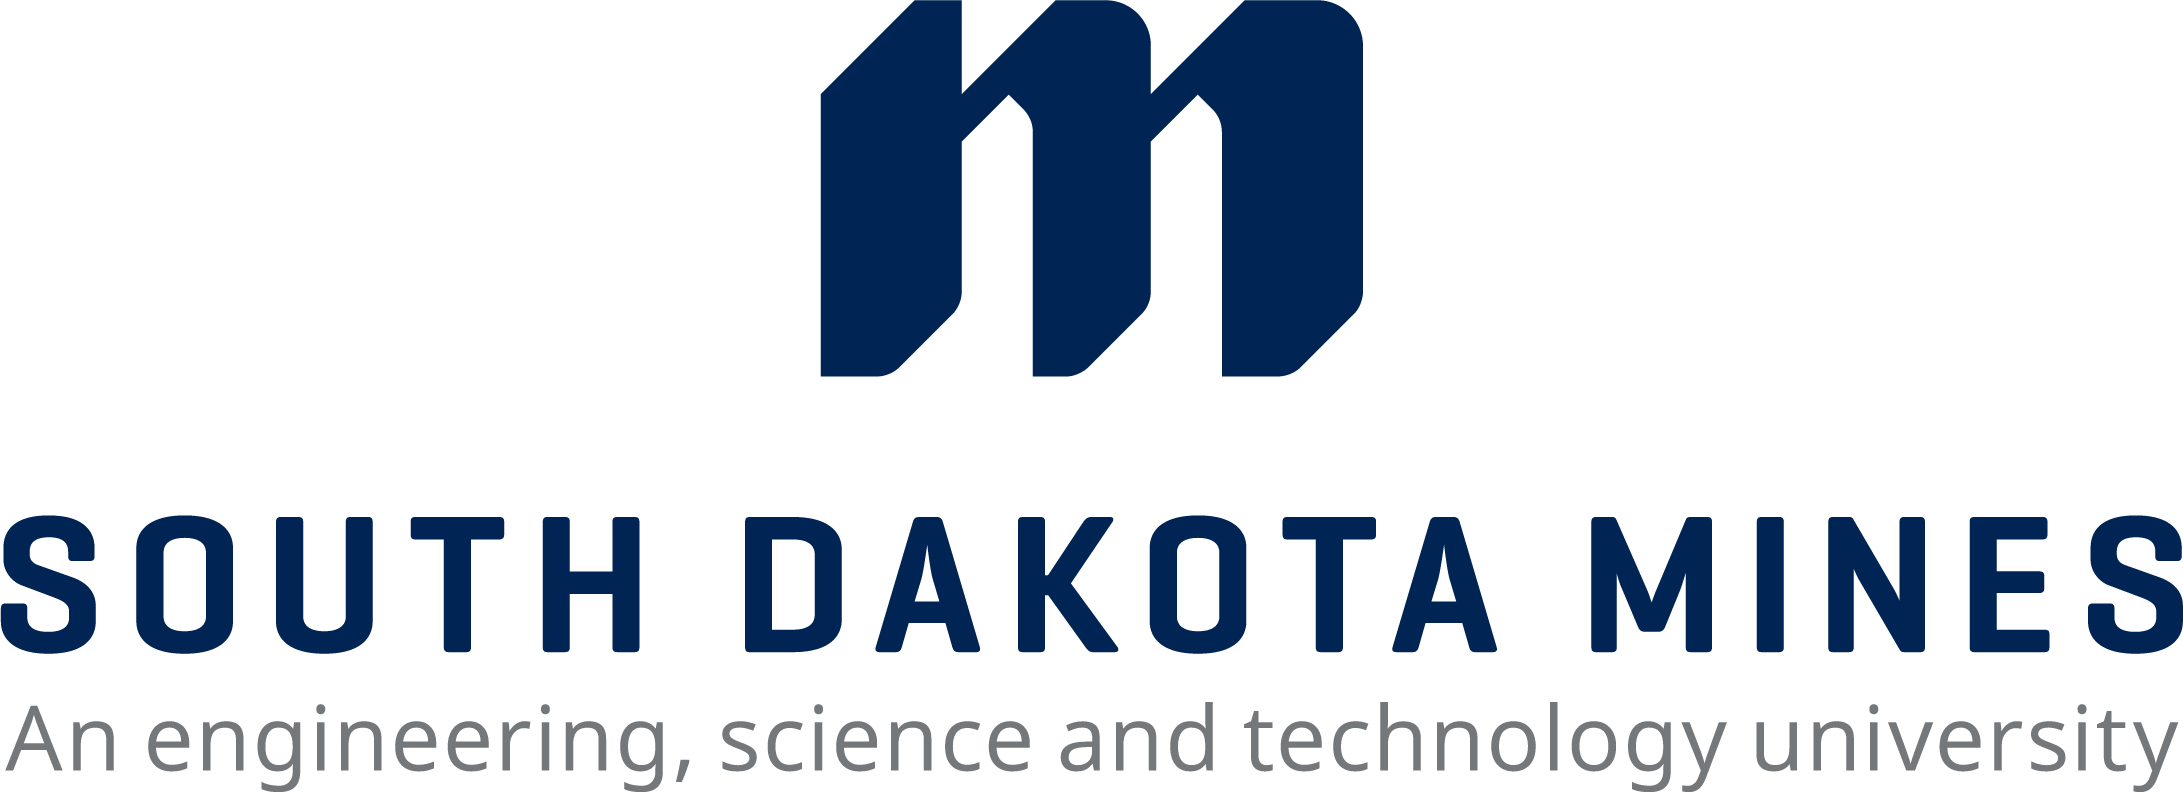 South Dakota Mines Logo